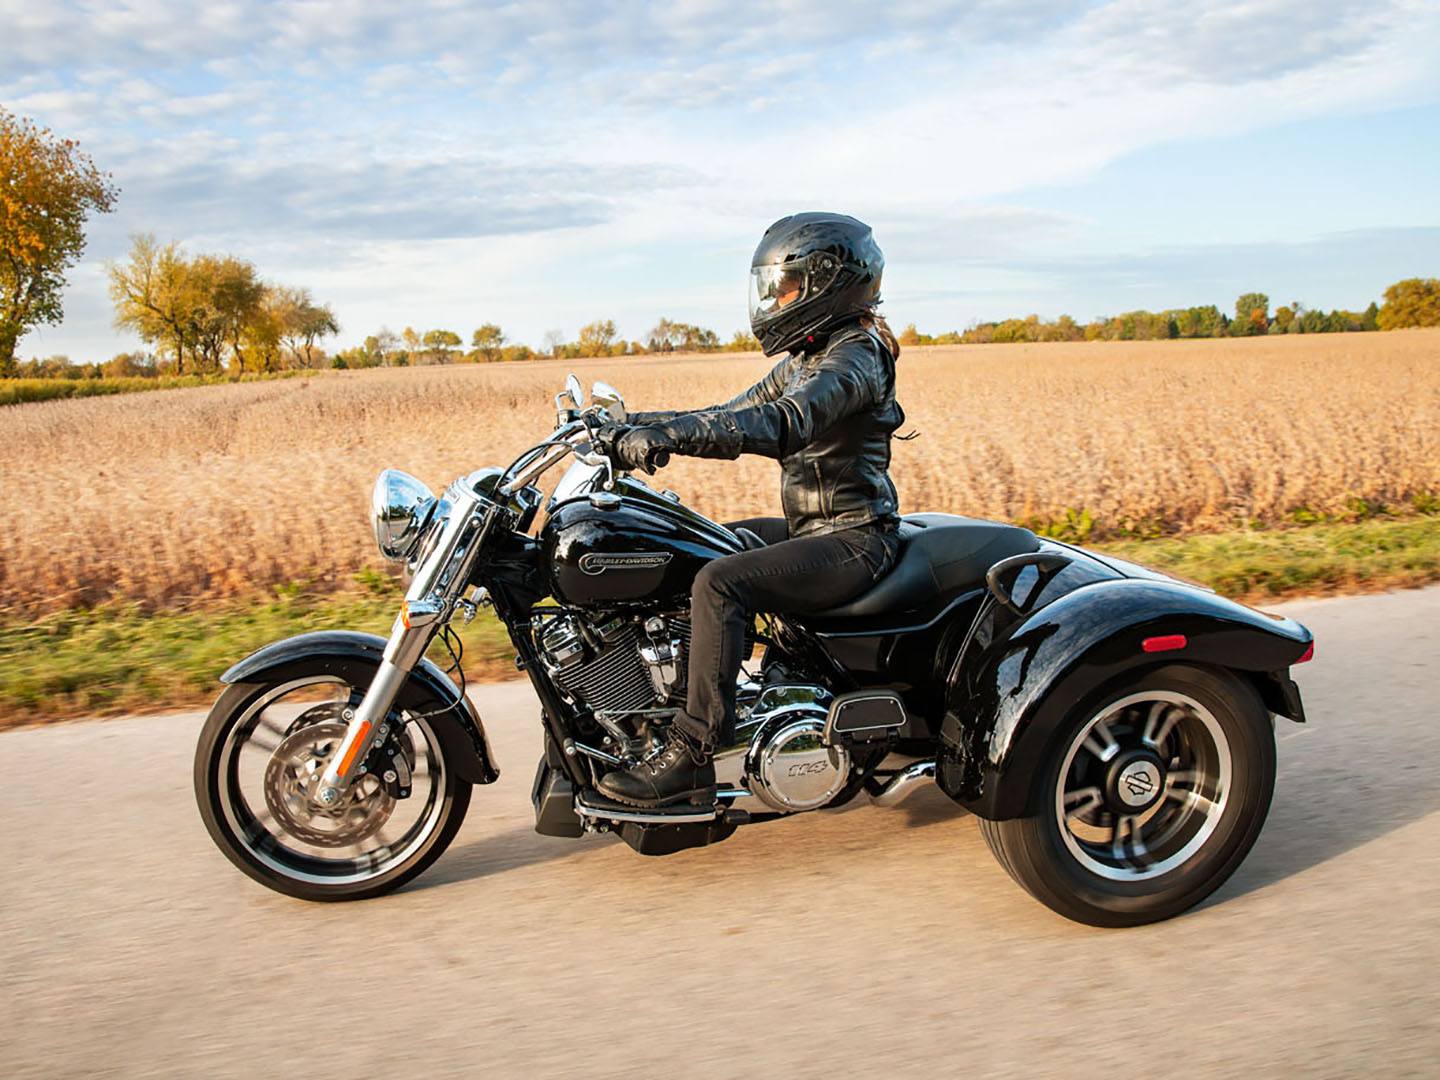 2021 Harley-Davidson Freewheeler® in Temple, Texas - Photo 8